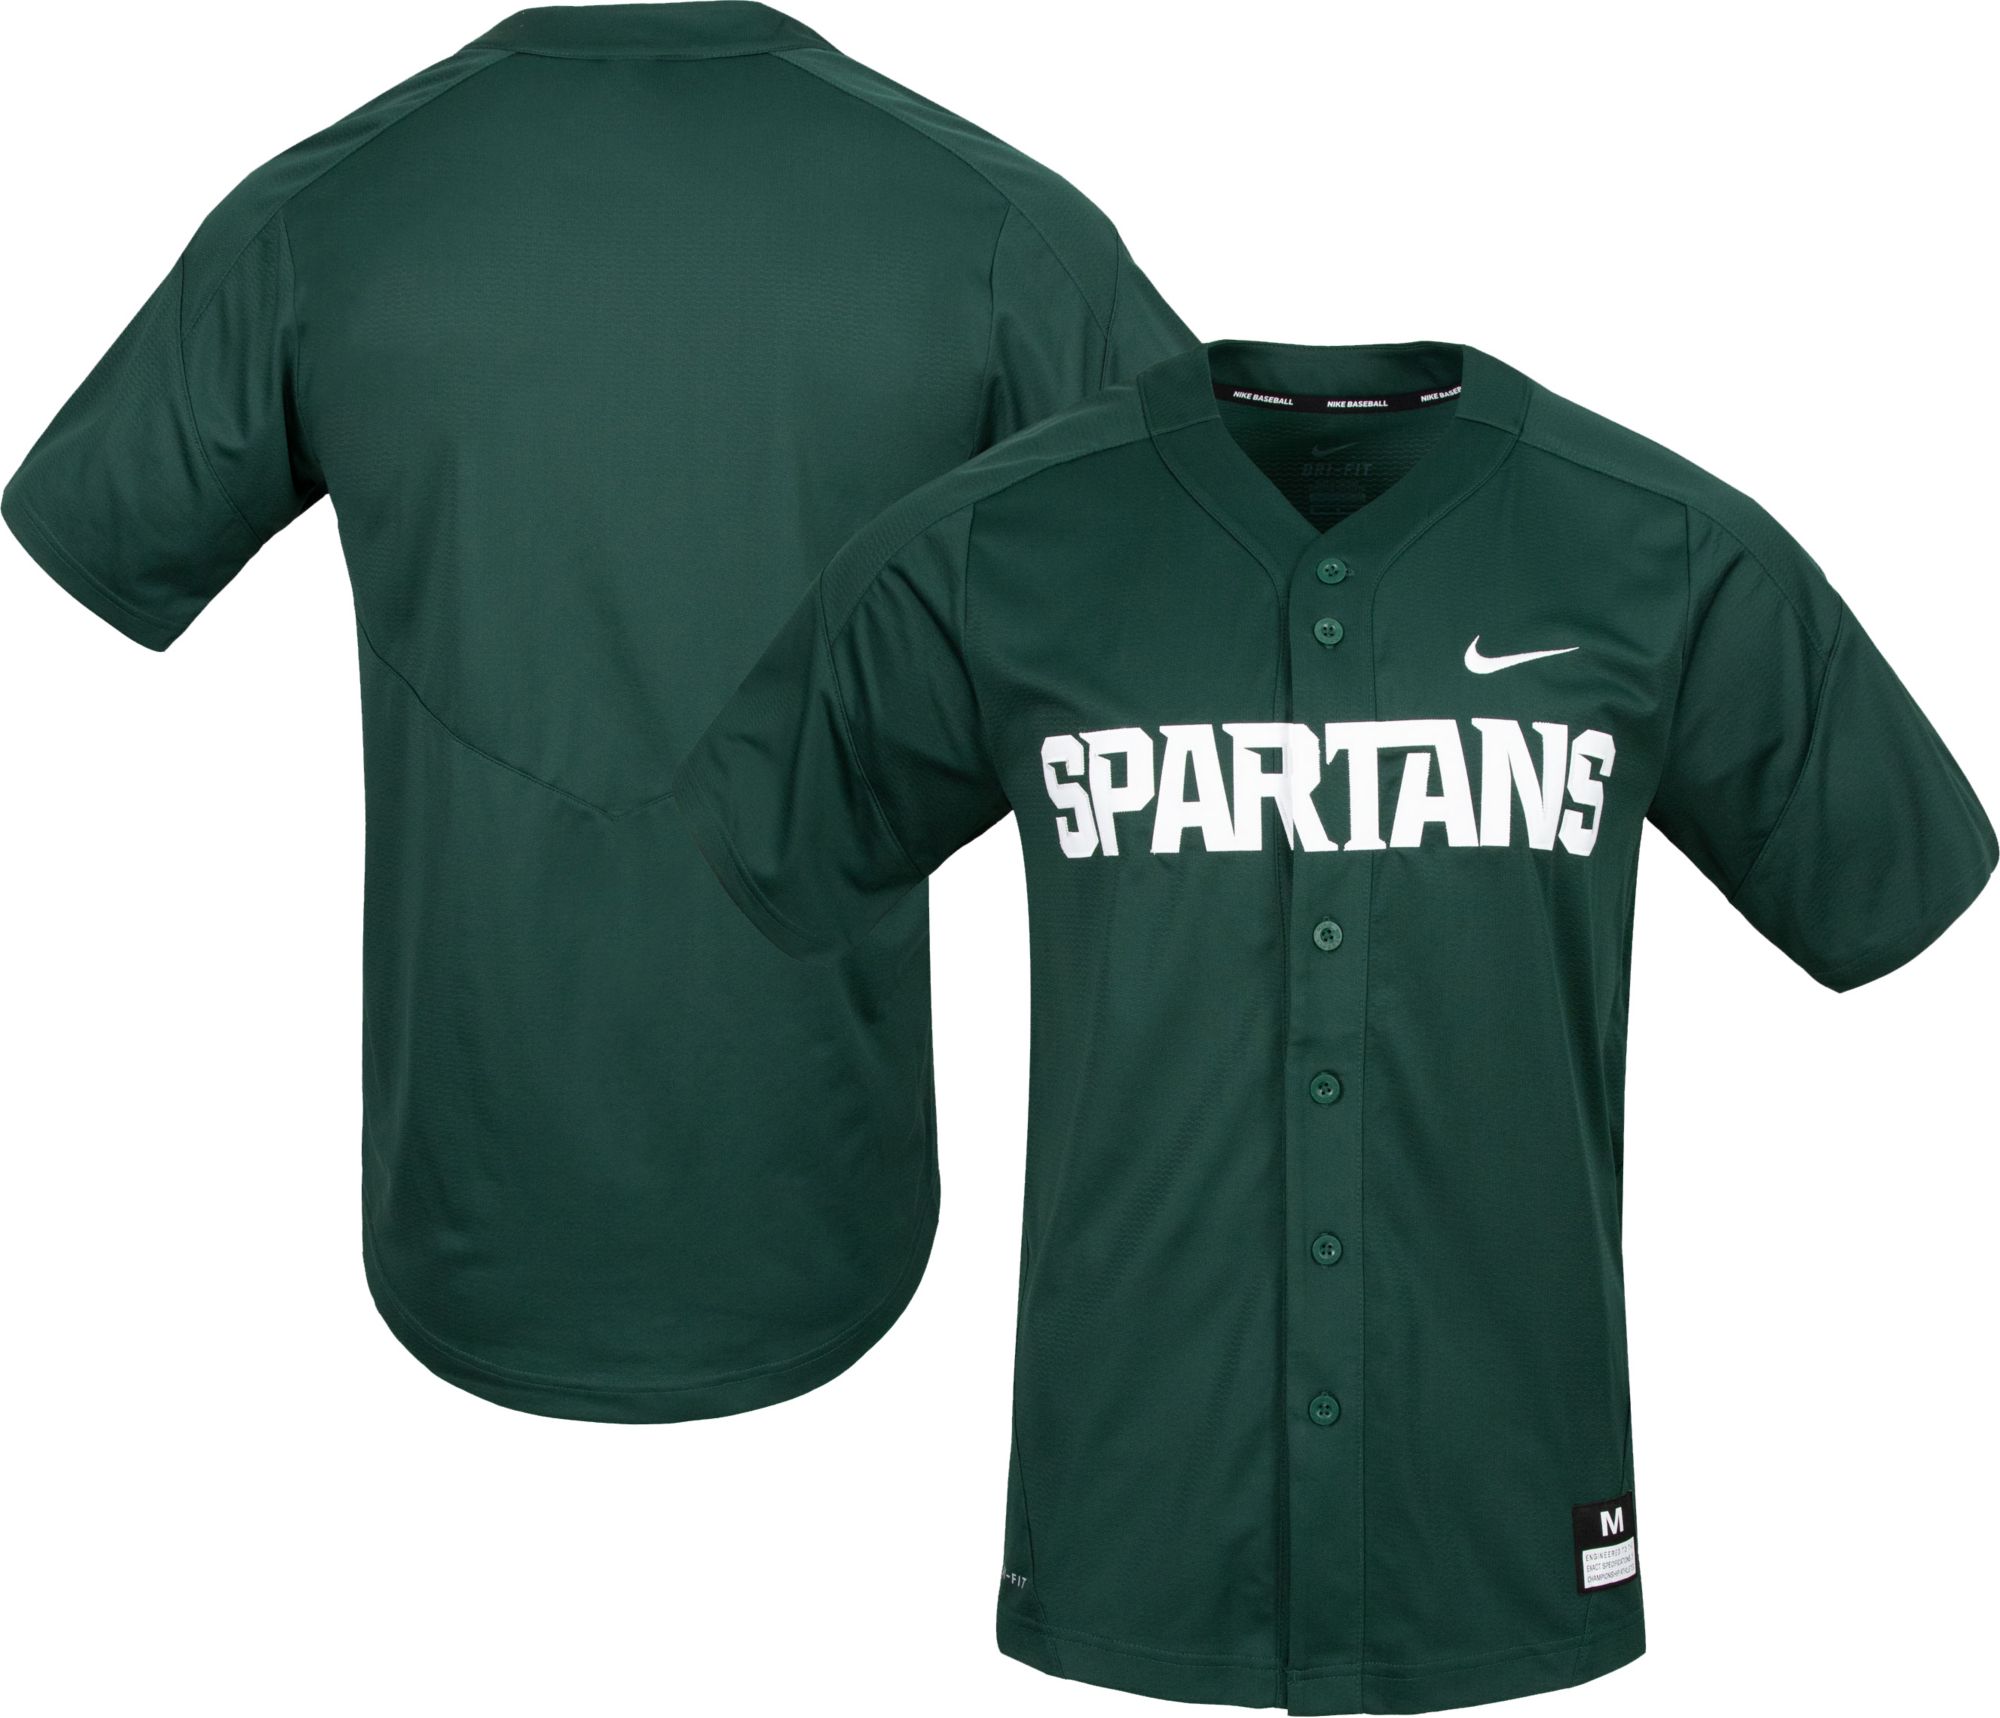 Nike / Men's Michigan State Spartans Green Replica Baseball Jersey